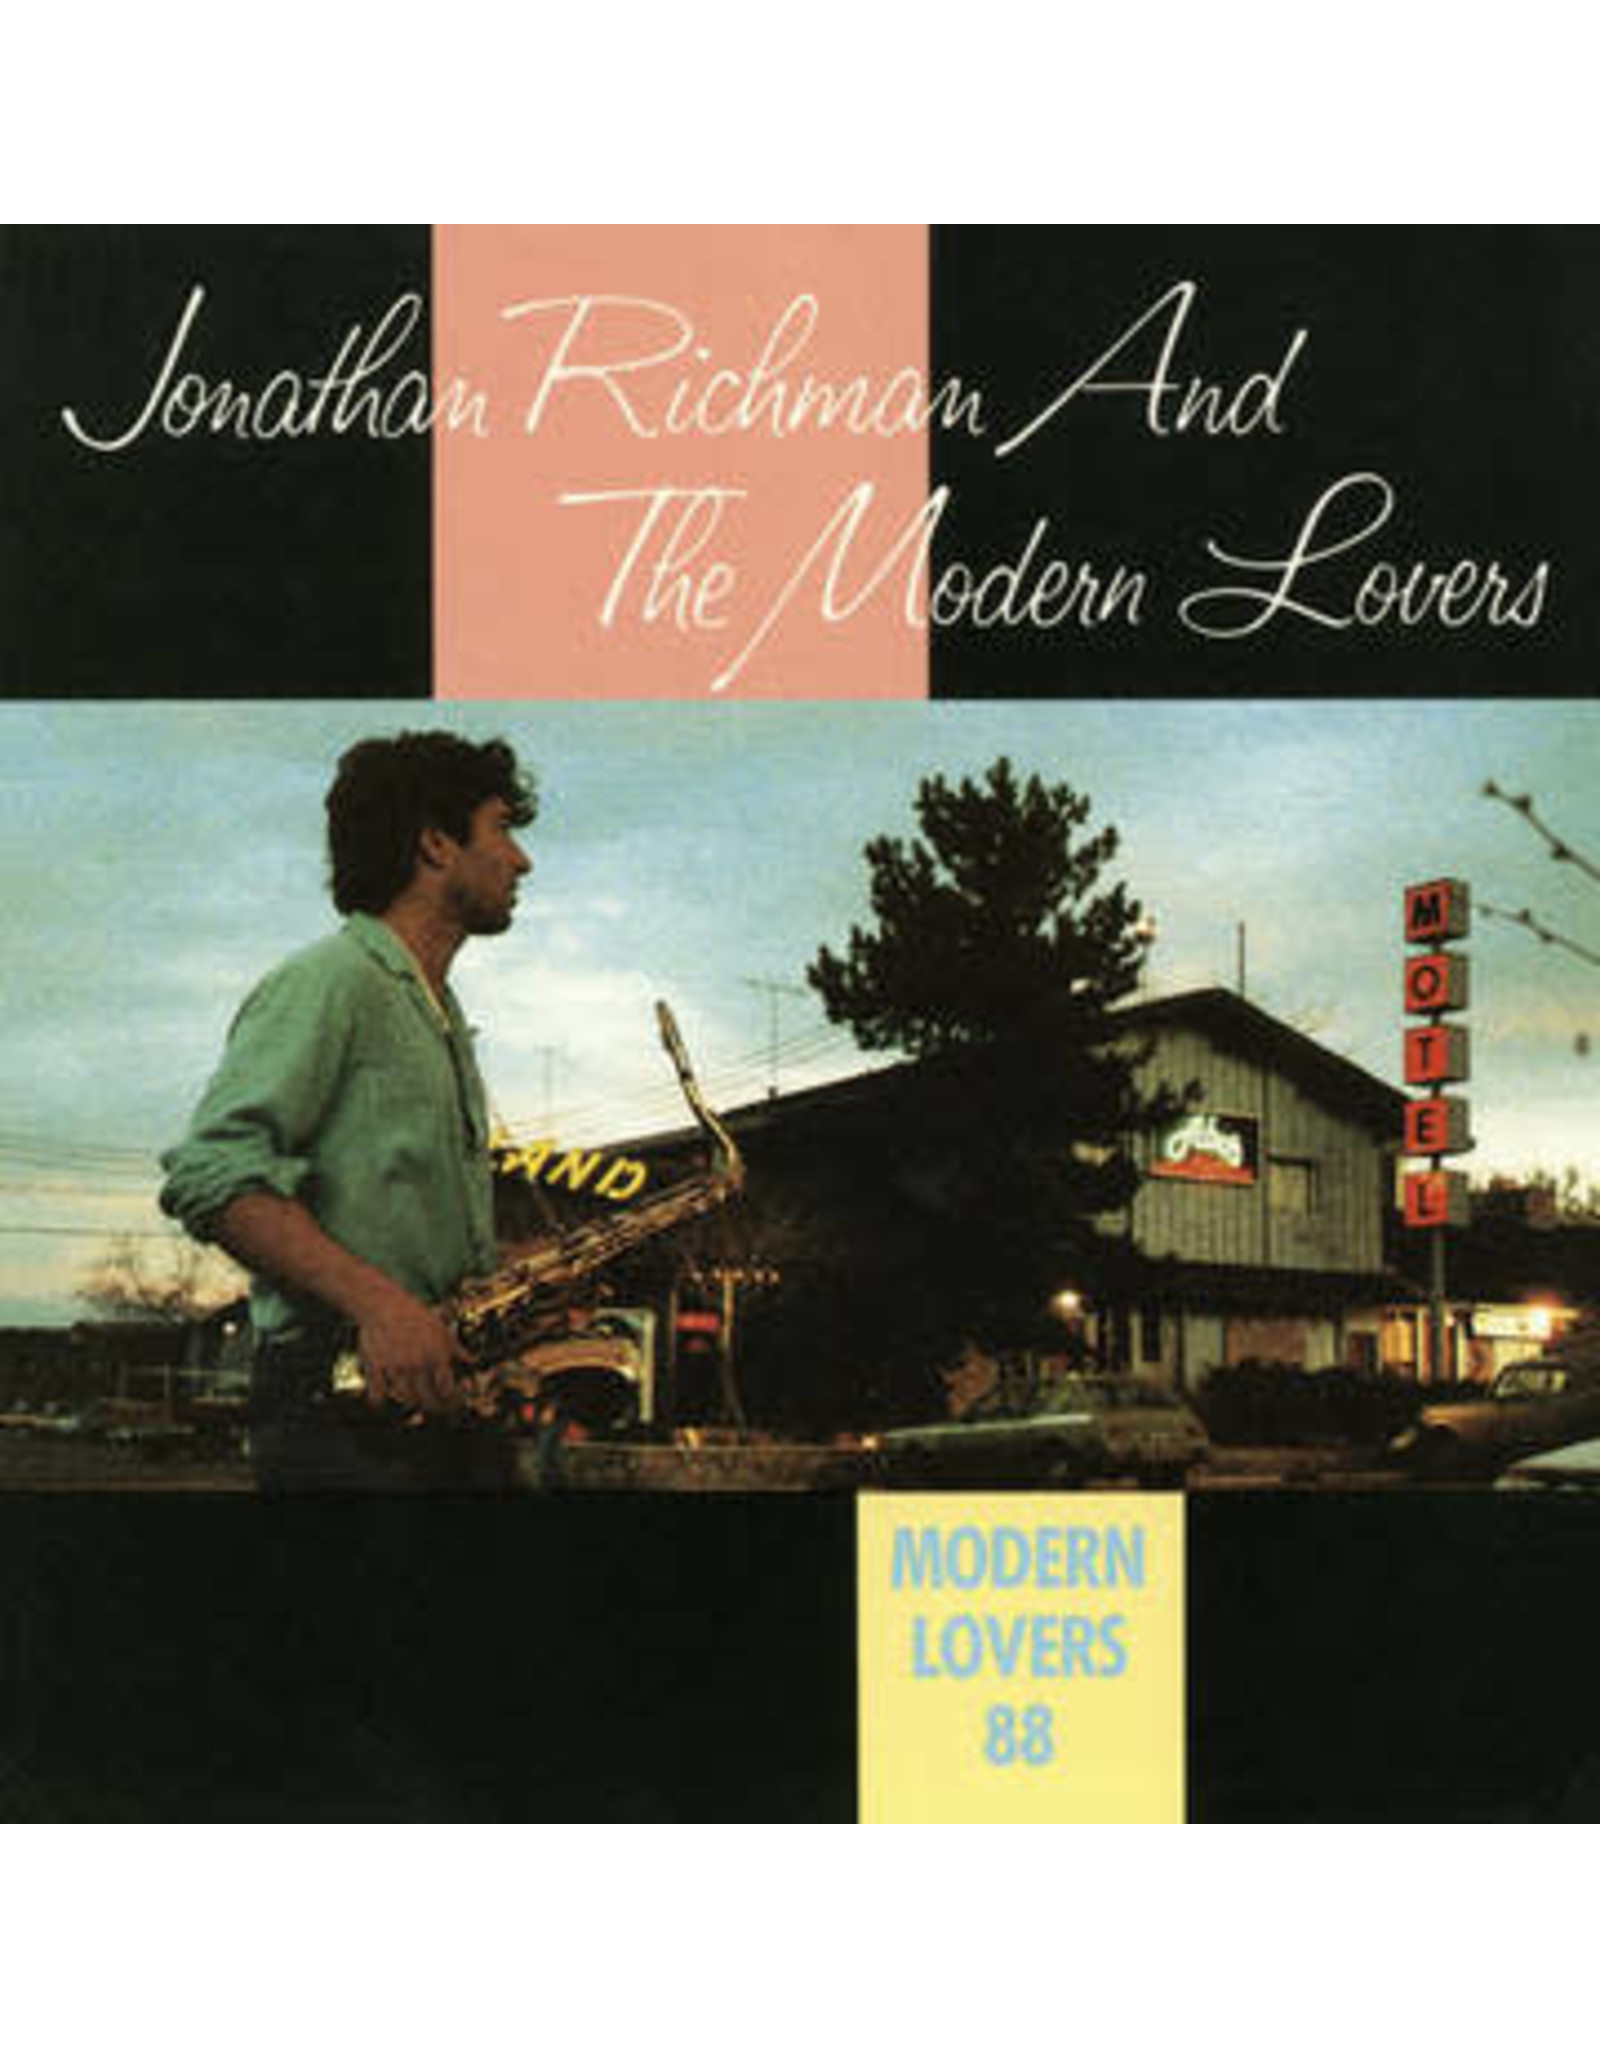 Craft Richman, Jonathan & The Modern Lovers: 2022RSD1 - Modern Lovers 88 35th anniversary edition  (sky blue) LP